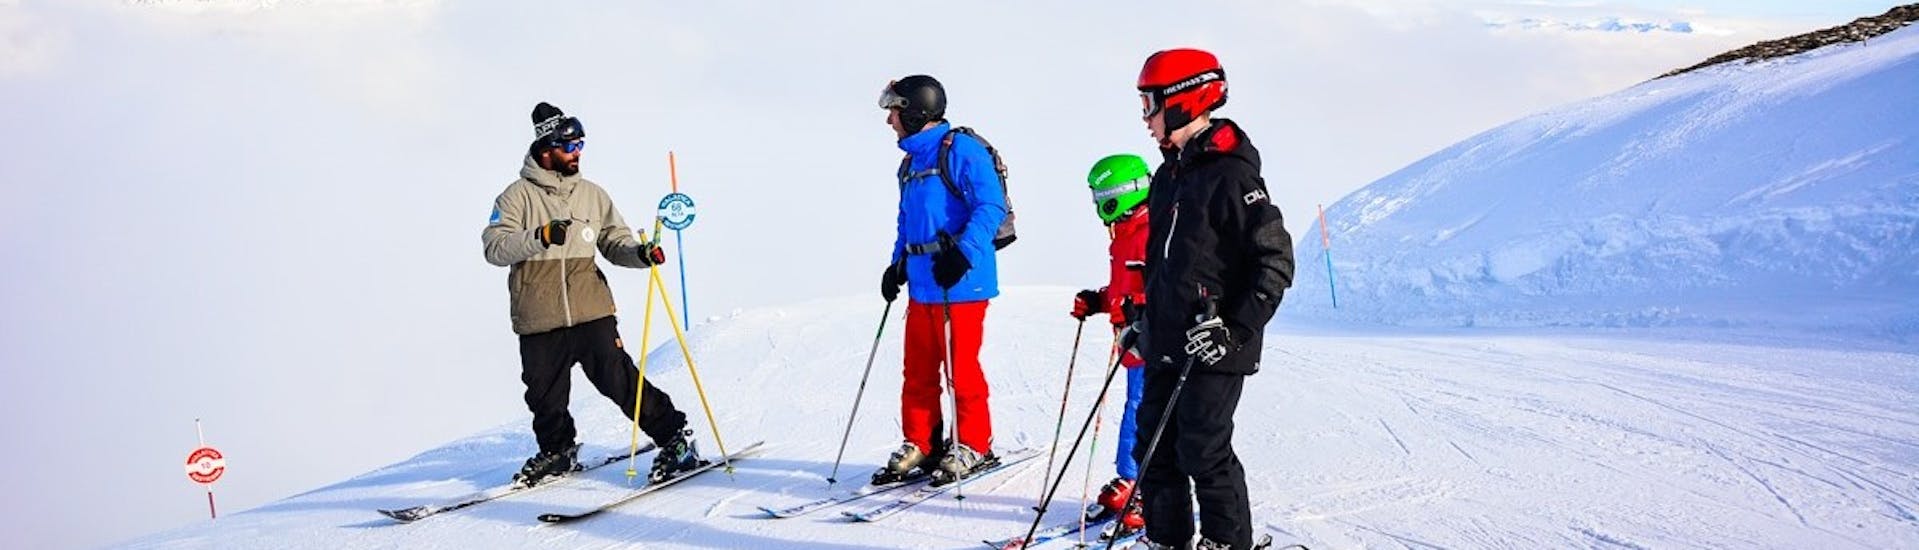 Lezioni di sci per adulti (da 15 anni) per principianti.